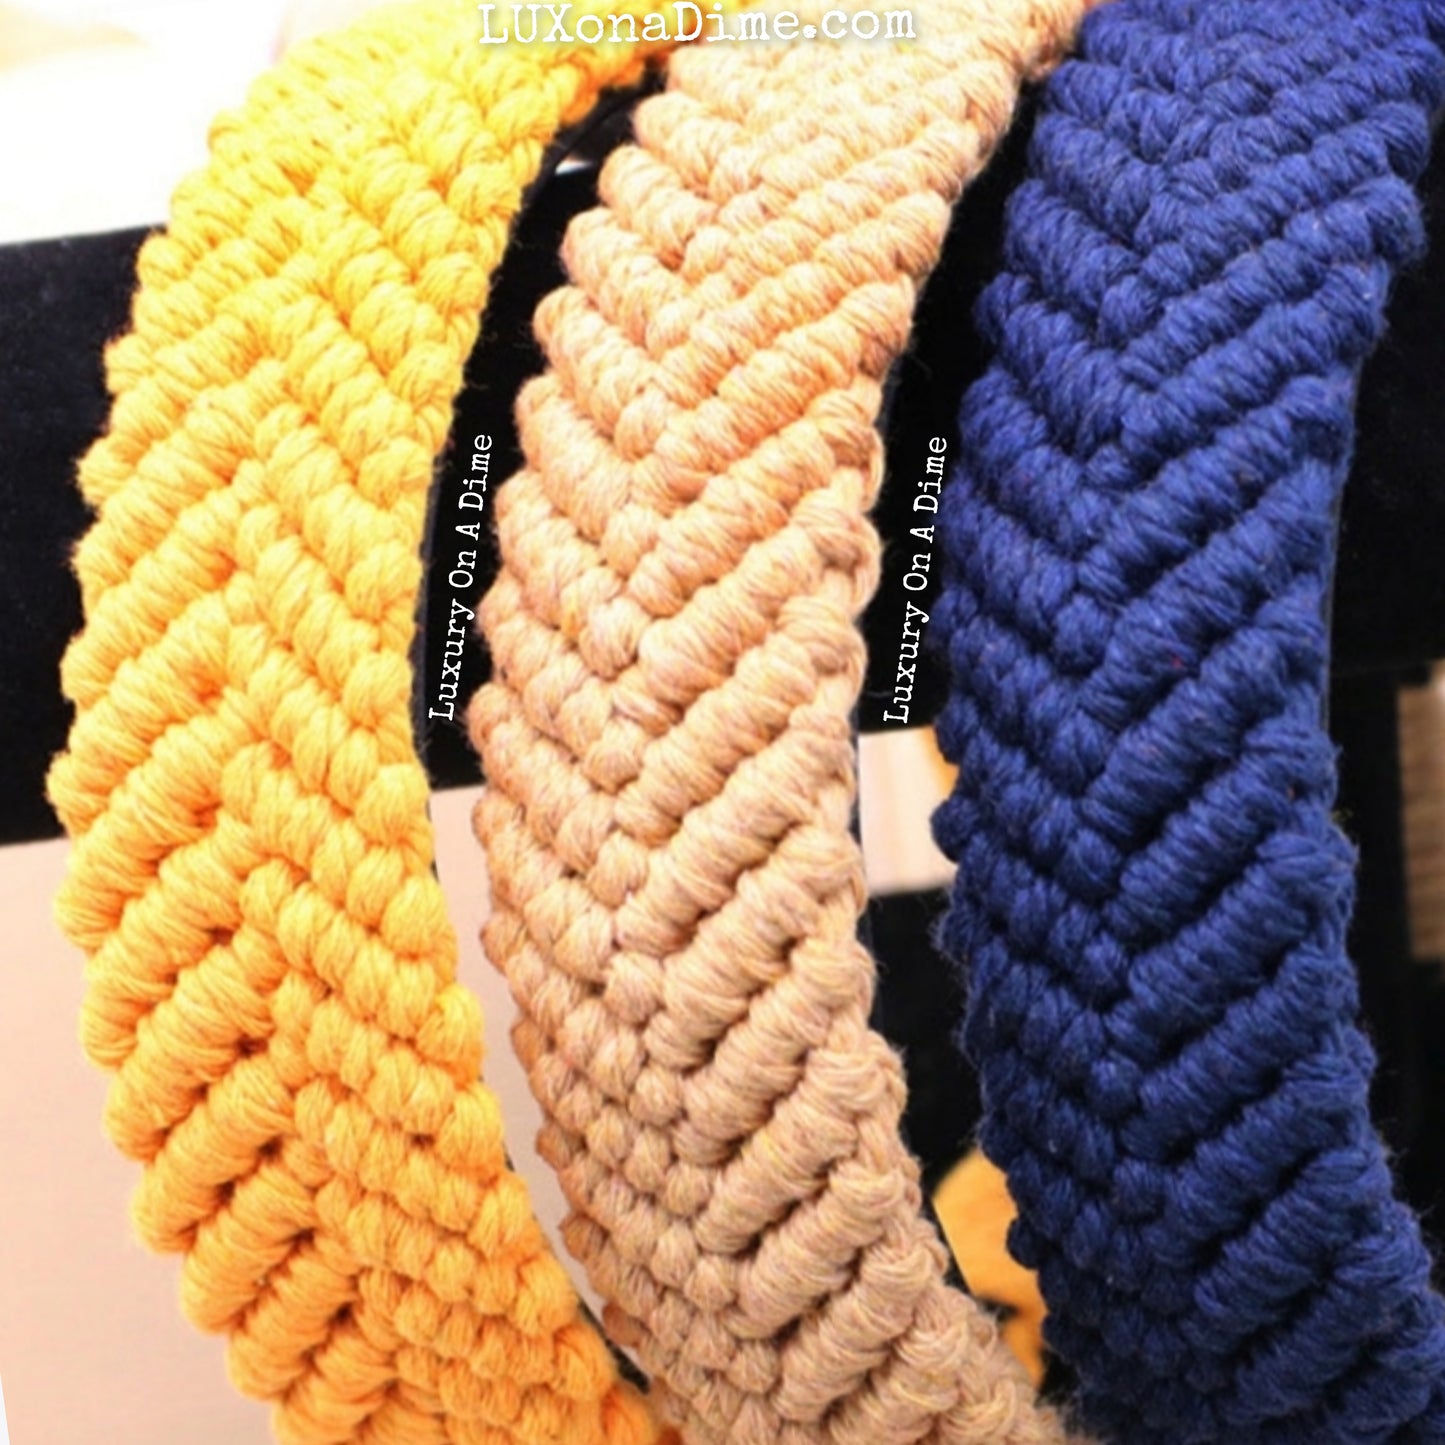 Premium Braided Macrame Headband Colorful Boho Hair Accessory (10 Colors)